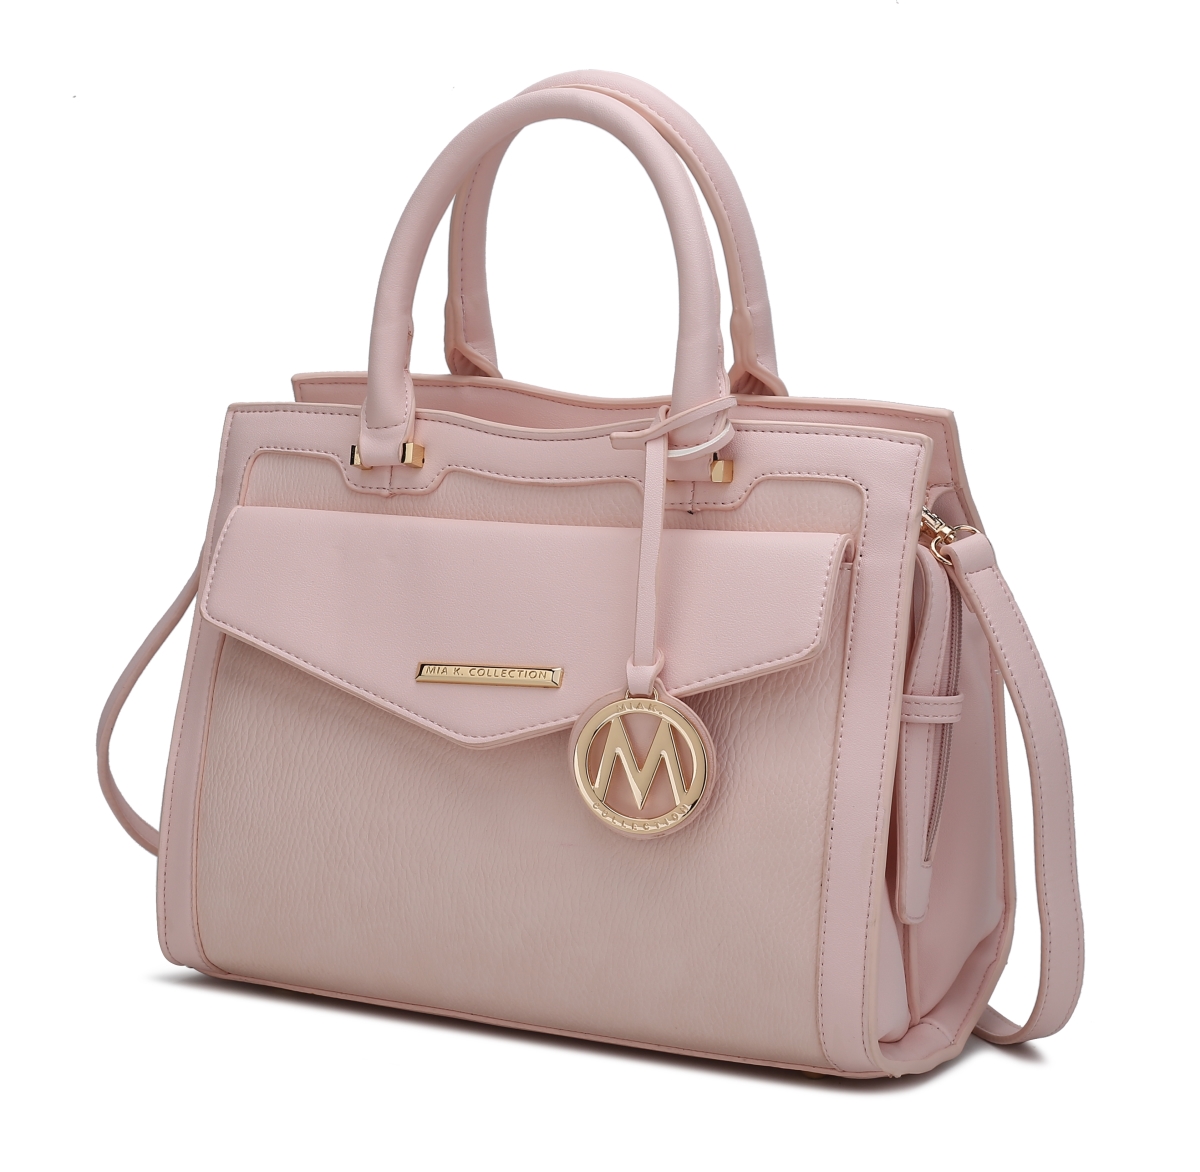 Picture of MKF Collection by Mia K. MKF-X652LPK-LPK Alyssa satchel Bag, Light Pink